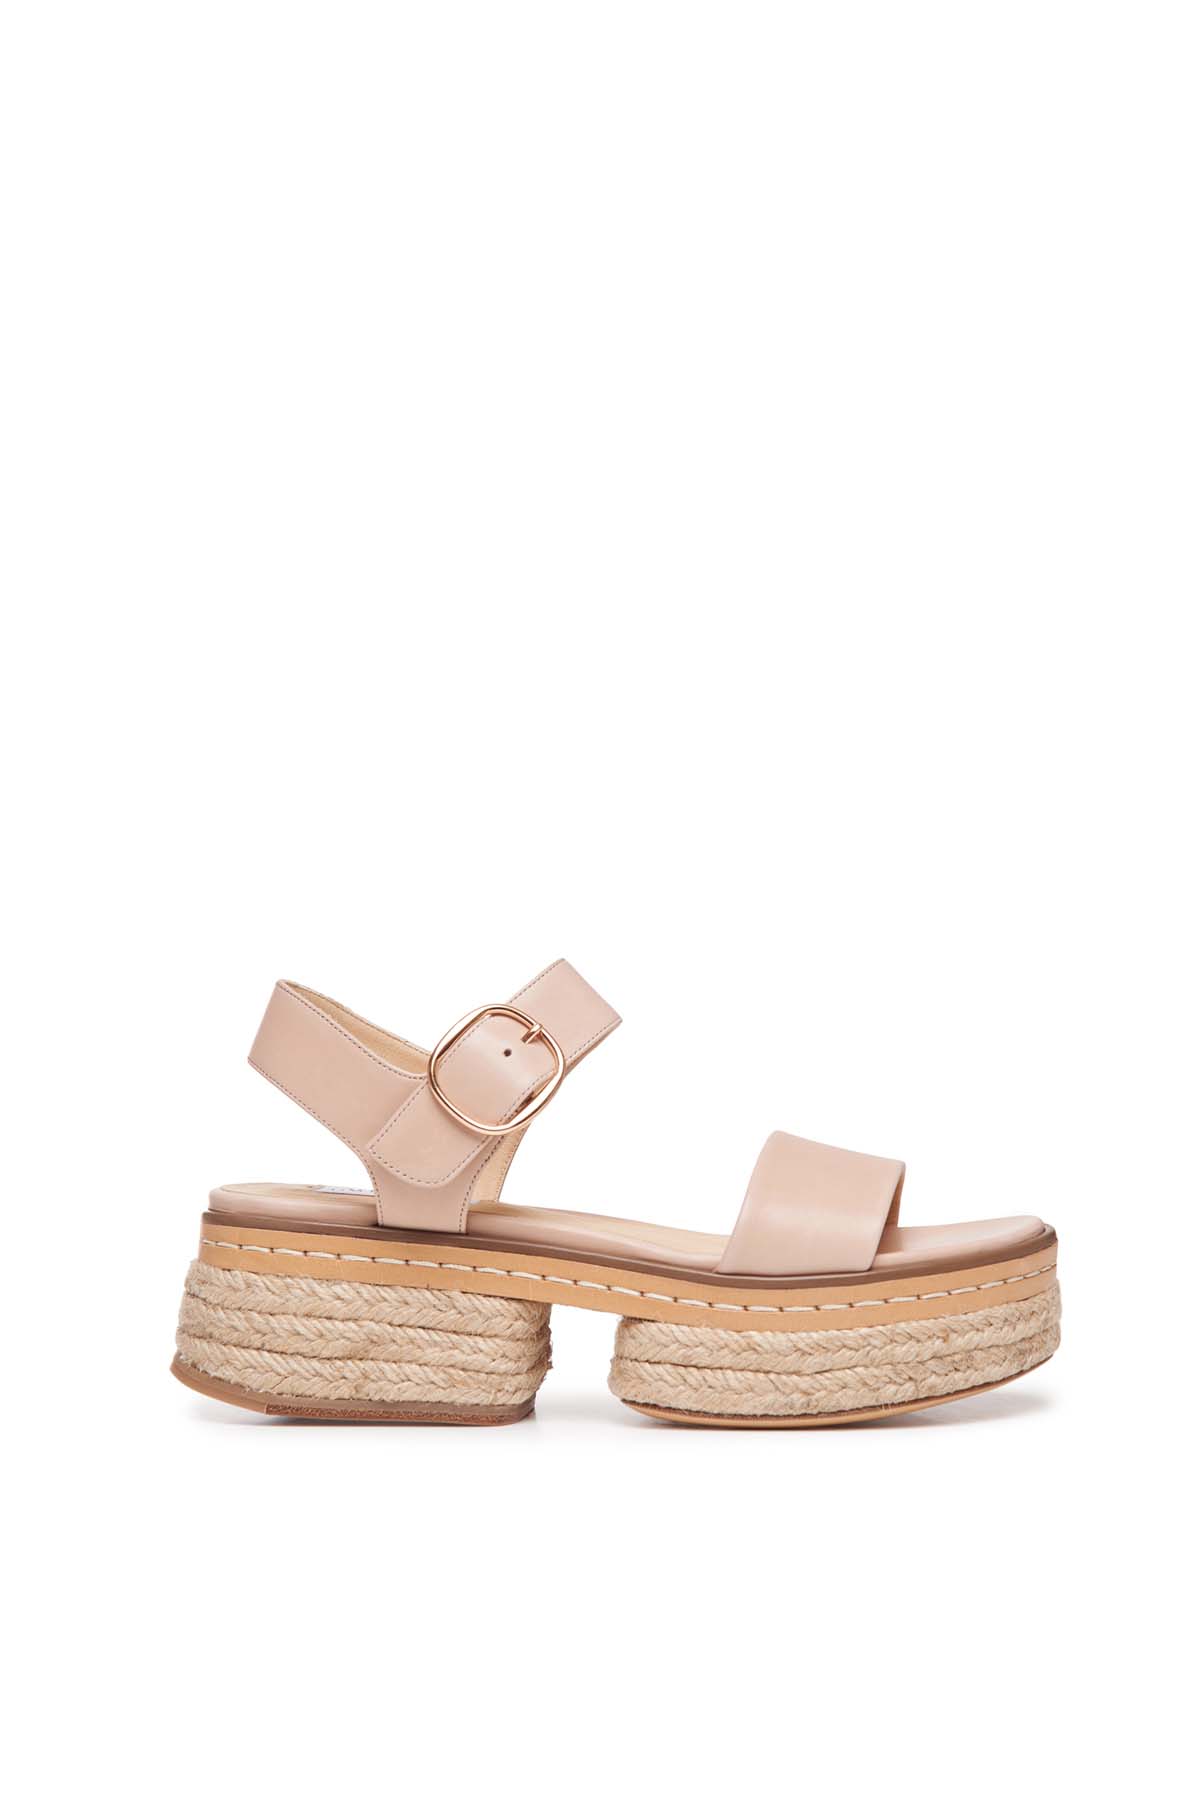 Ryka Braided Sandal in Blush Leather